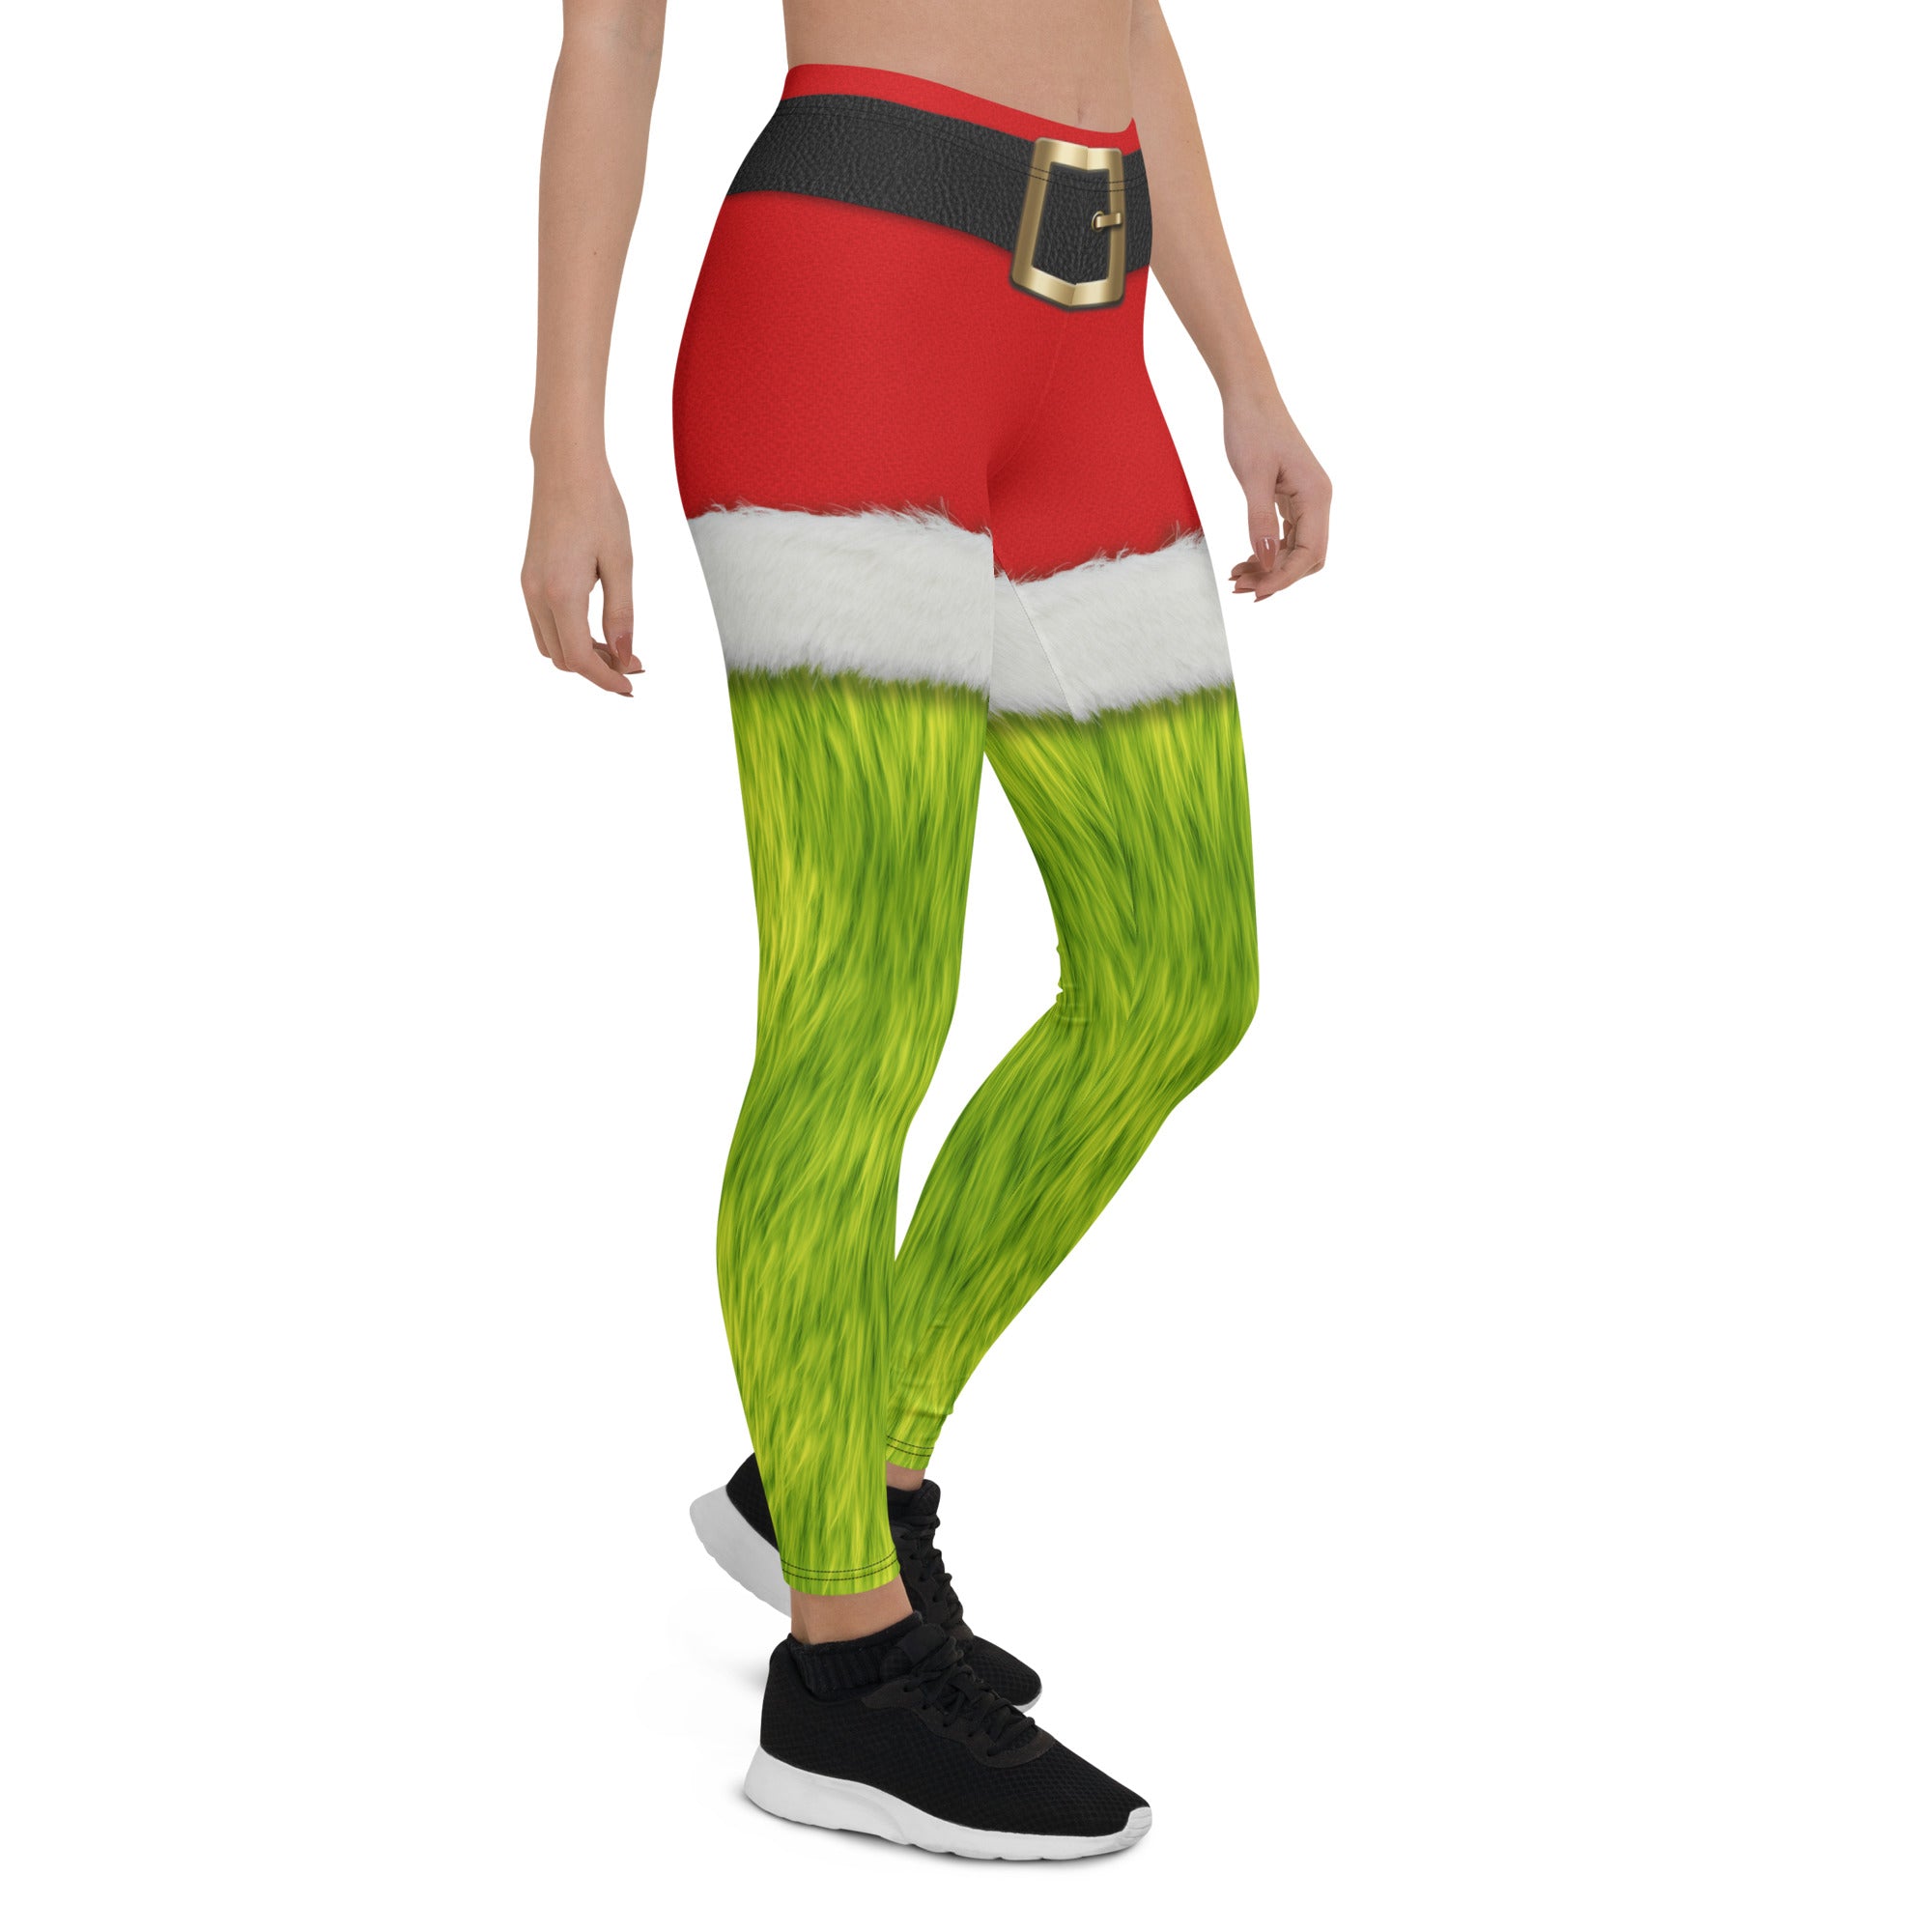 Womens Funny Printed Ugly Christmas Leggings Stretchy Xmas Tights